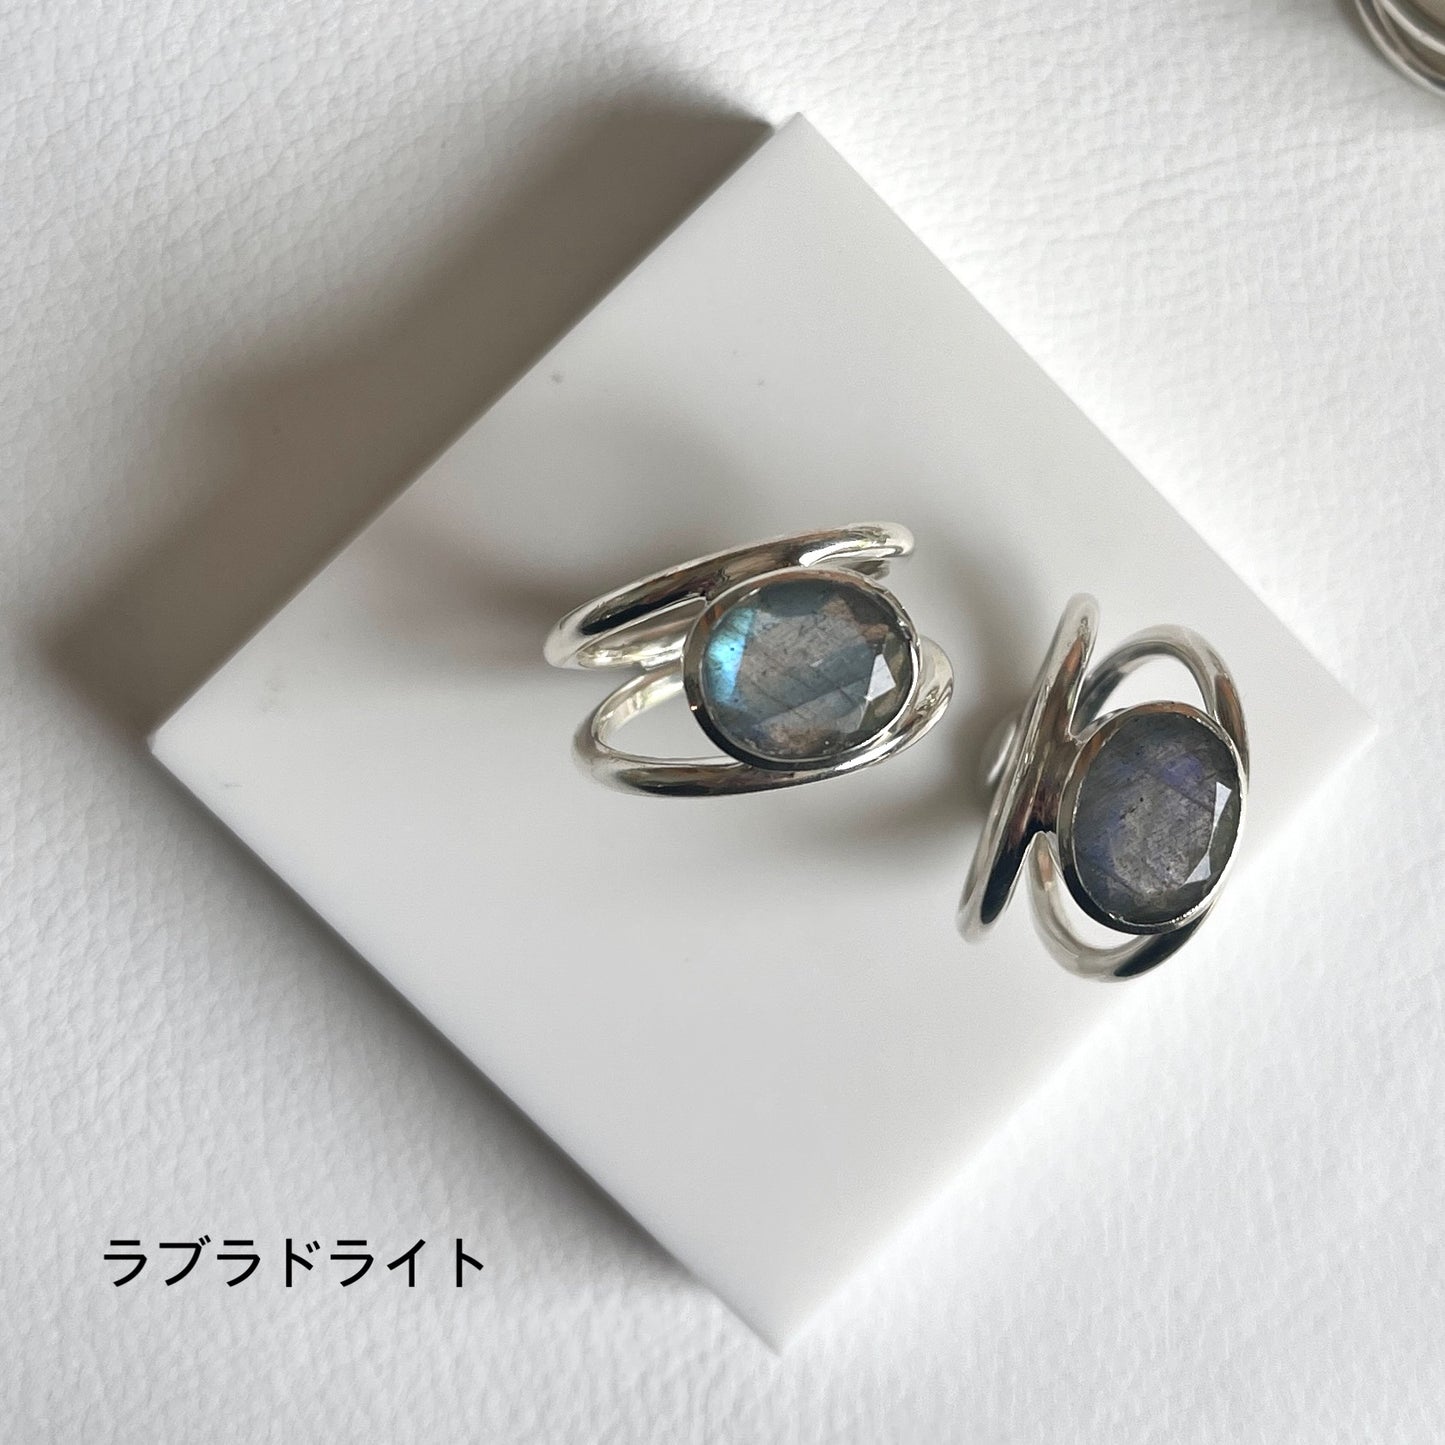 Silver925 design ring 3